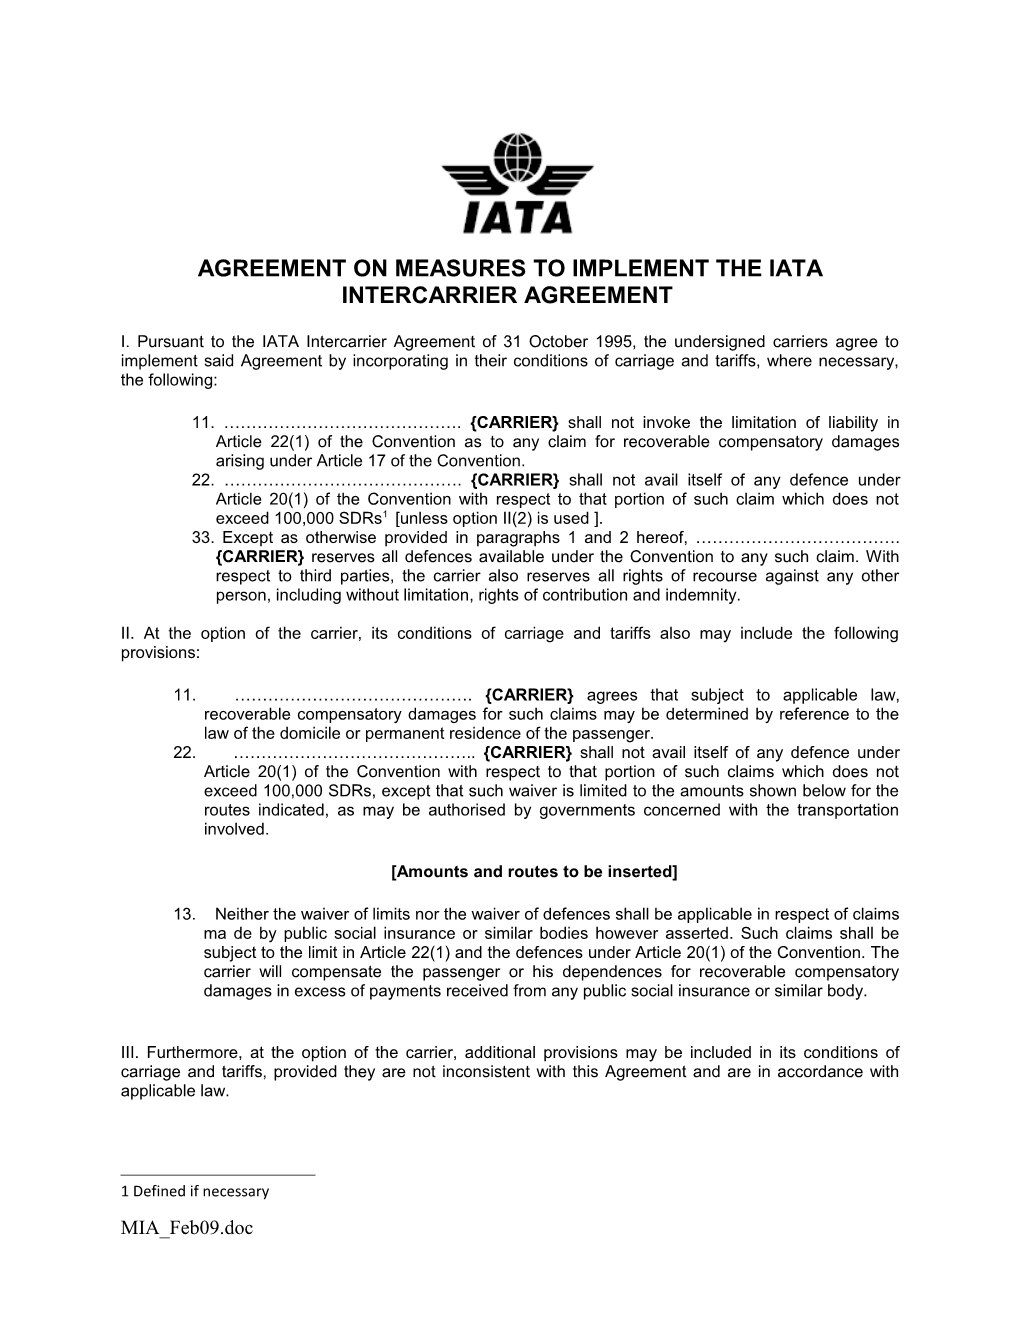 Measures-Implementation-Intercarrier-Agreement-Feb09